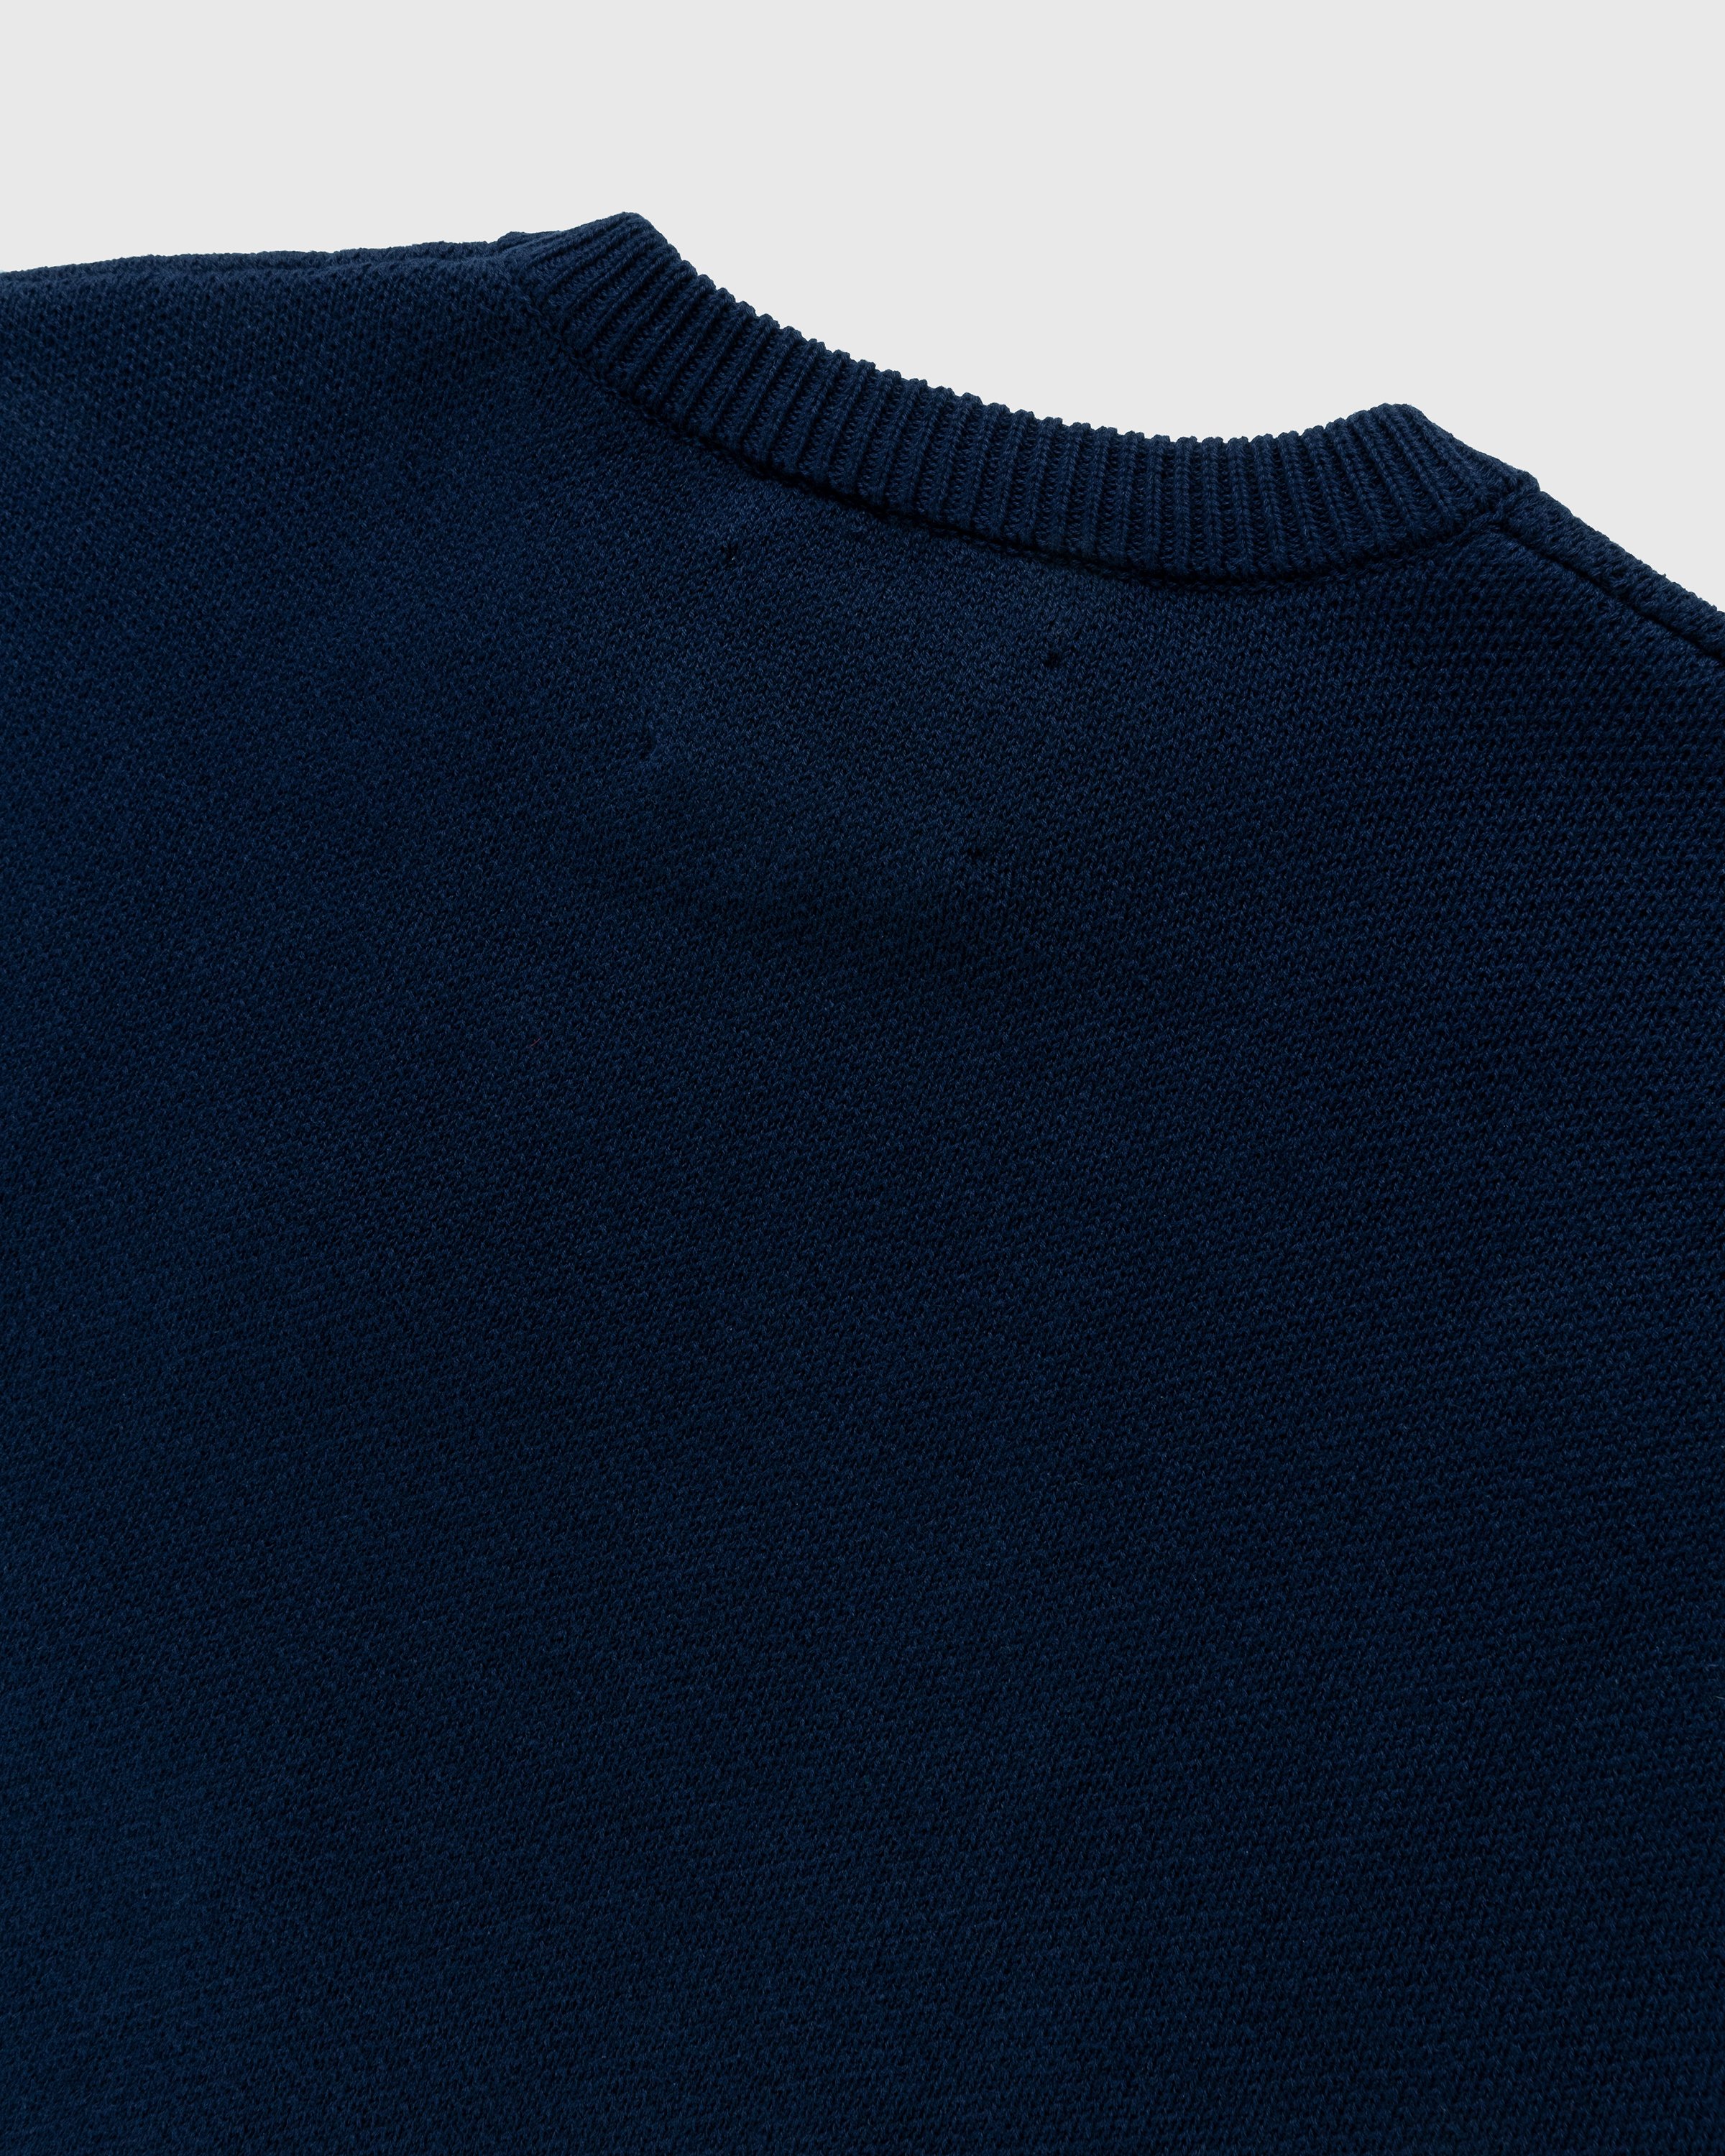 RUF x Highsnobiety - Knitted Crewneck Sweater Navy - Clothing - Blue - Image 5